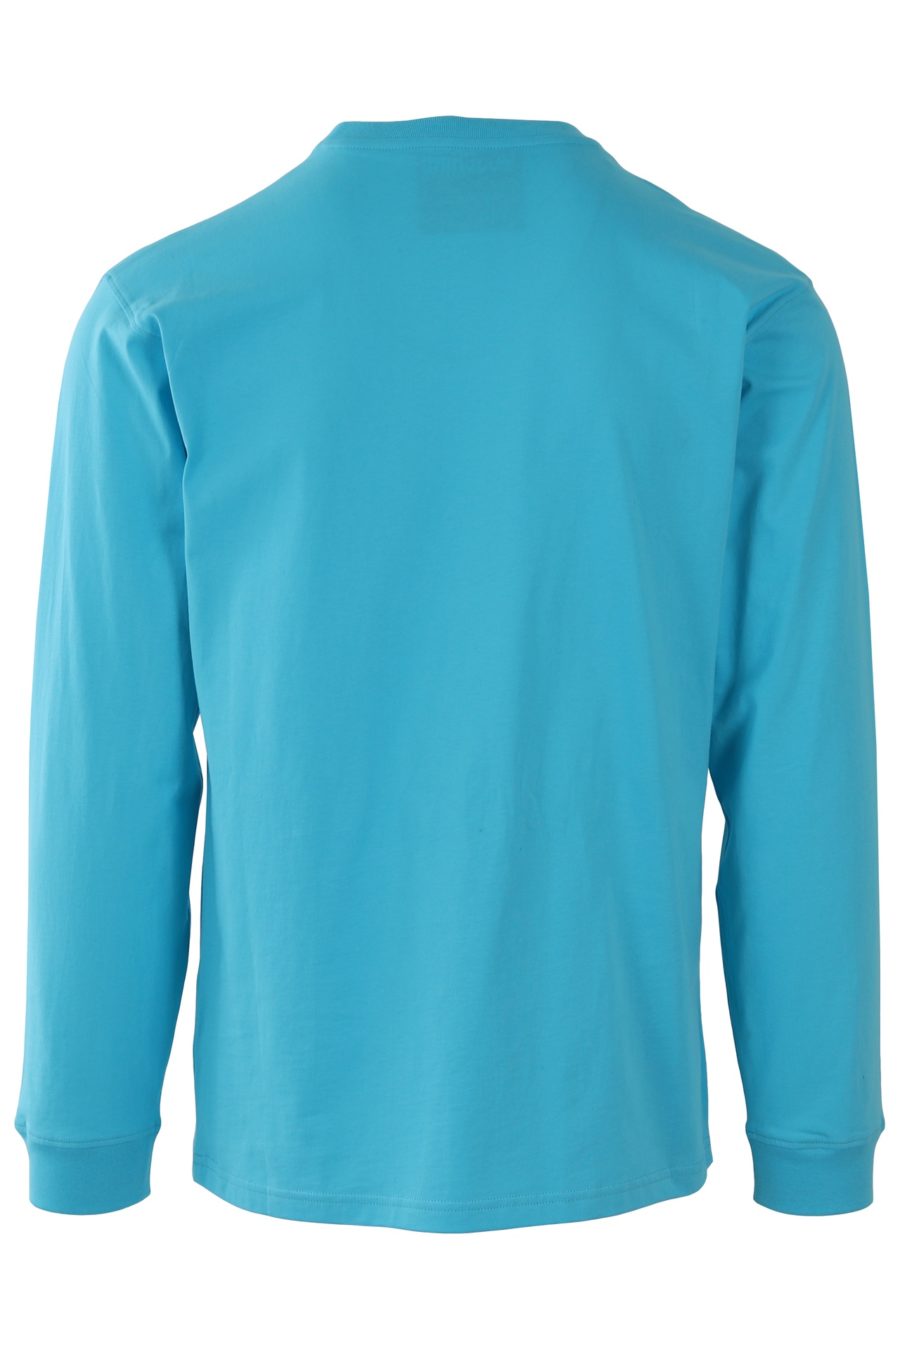 Camiseta de manga larga Moschino Couture azul celeste - 0fd393cc75ced17e835618aa53241dd78ad48c82